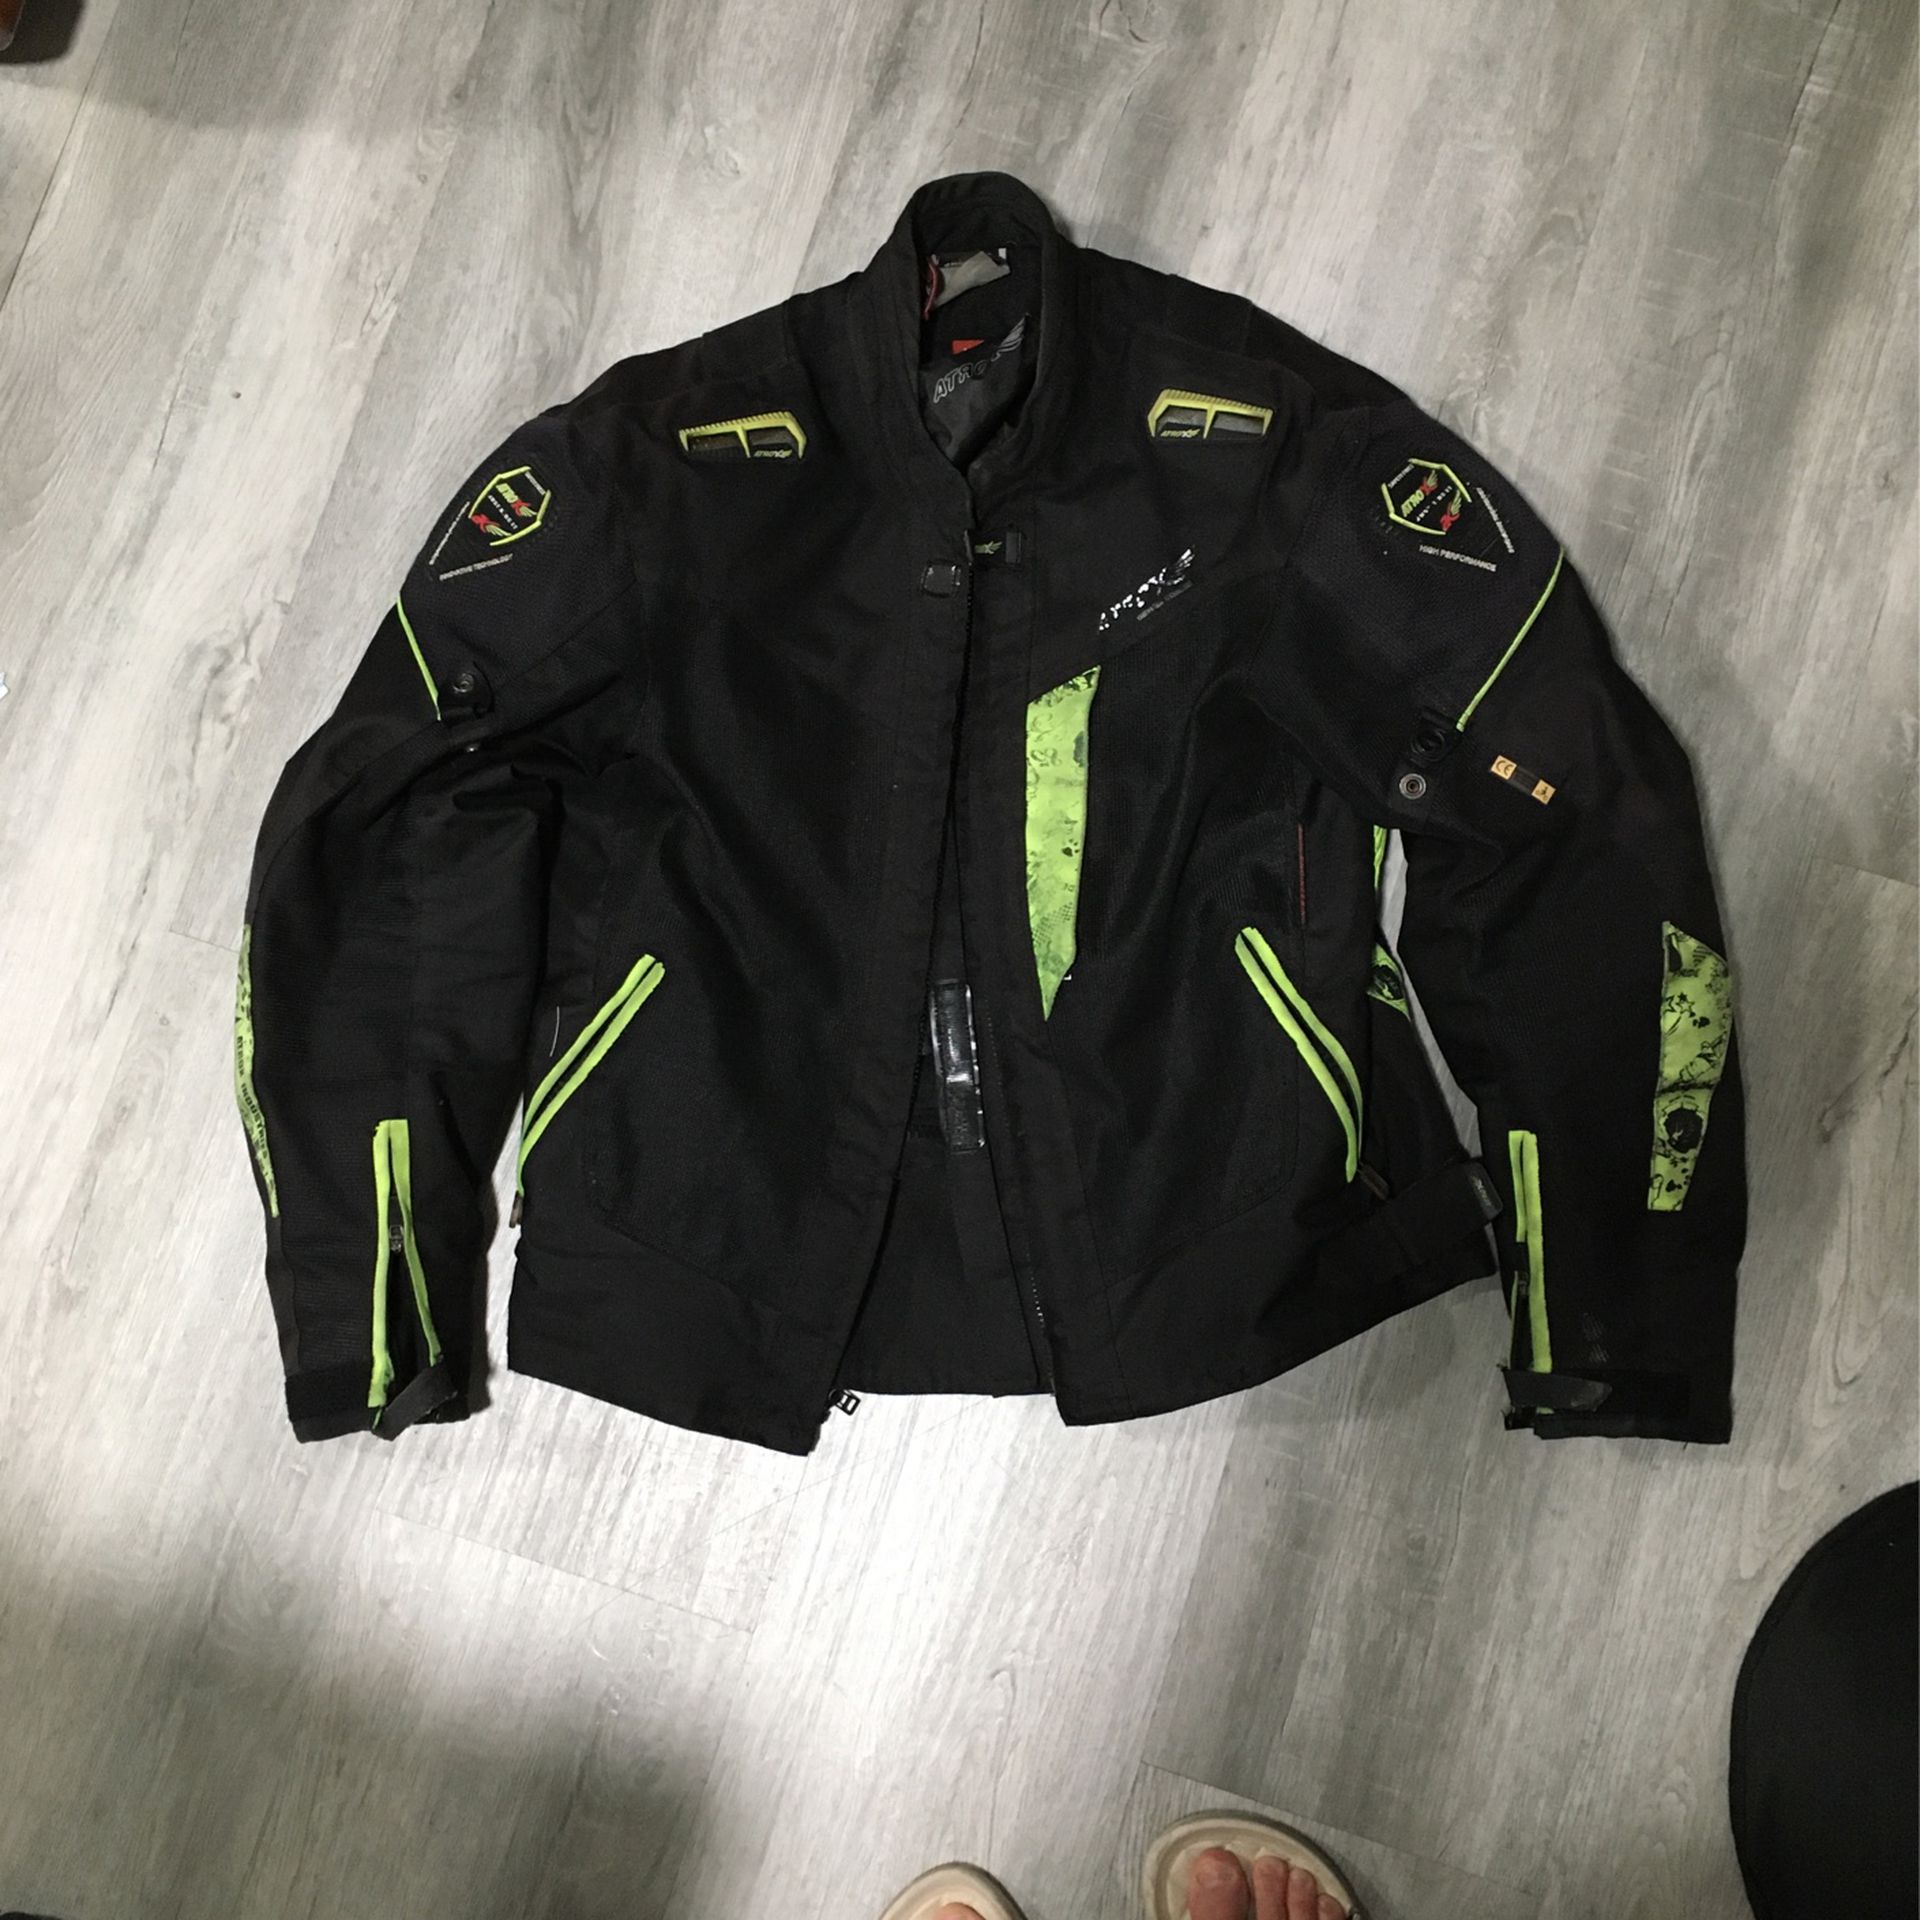 Motorcycle jacket 